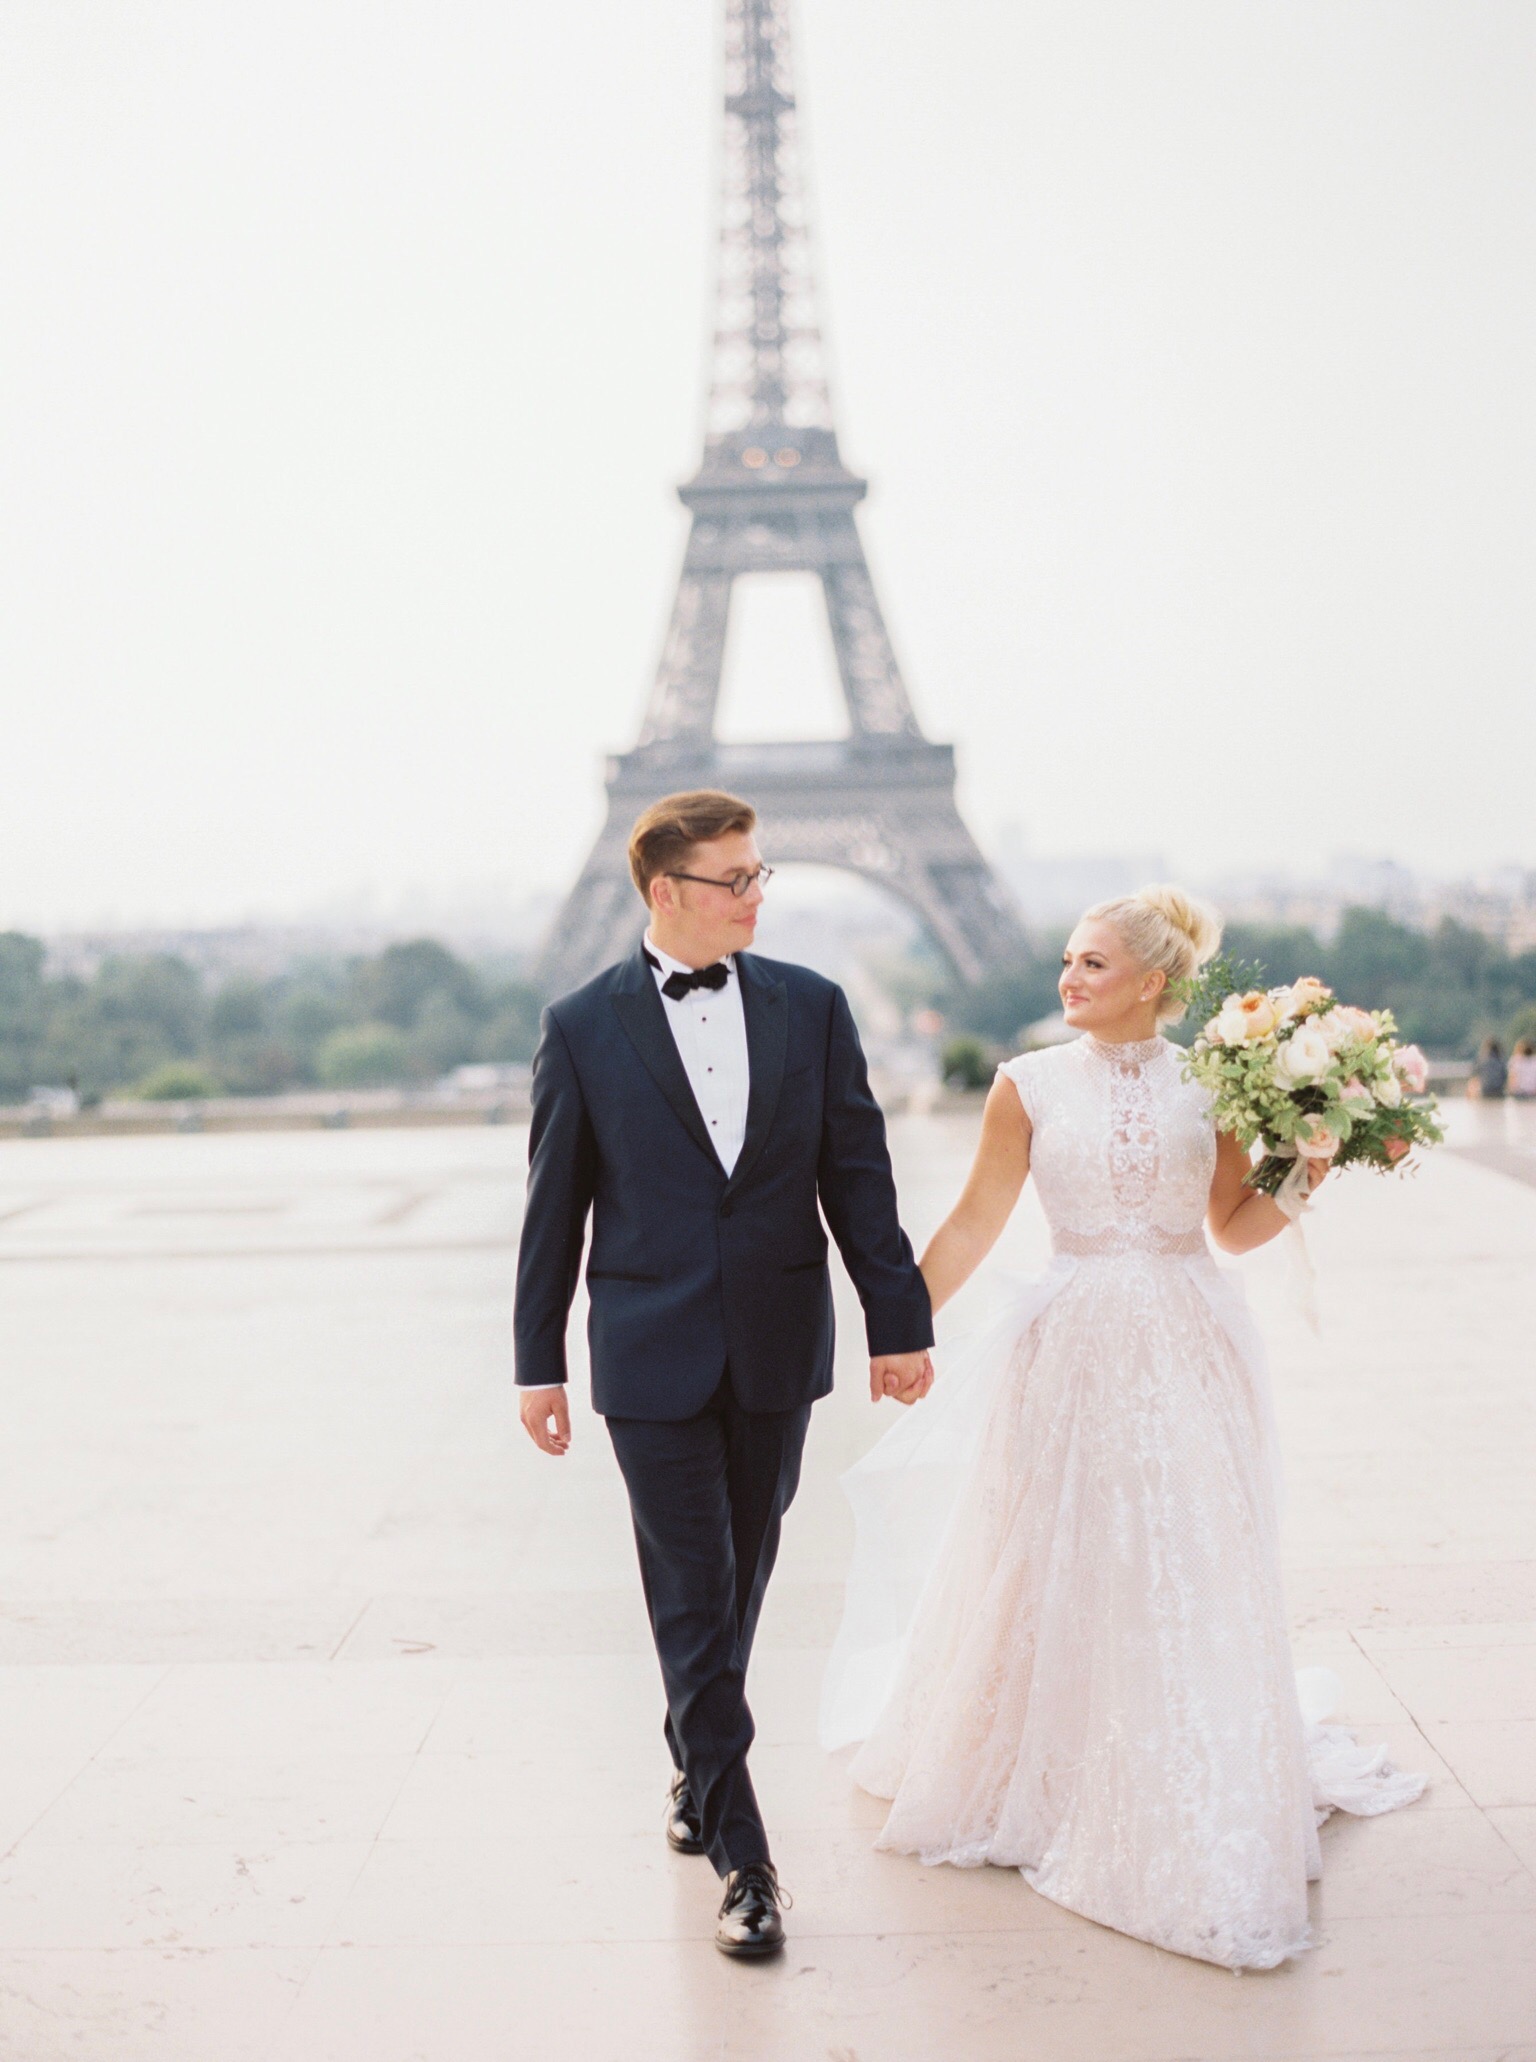 English Speaking Wedding Planner in Paris